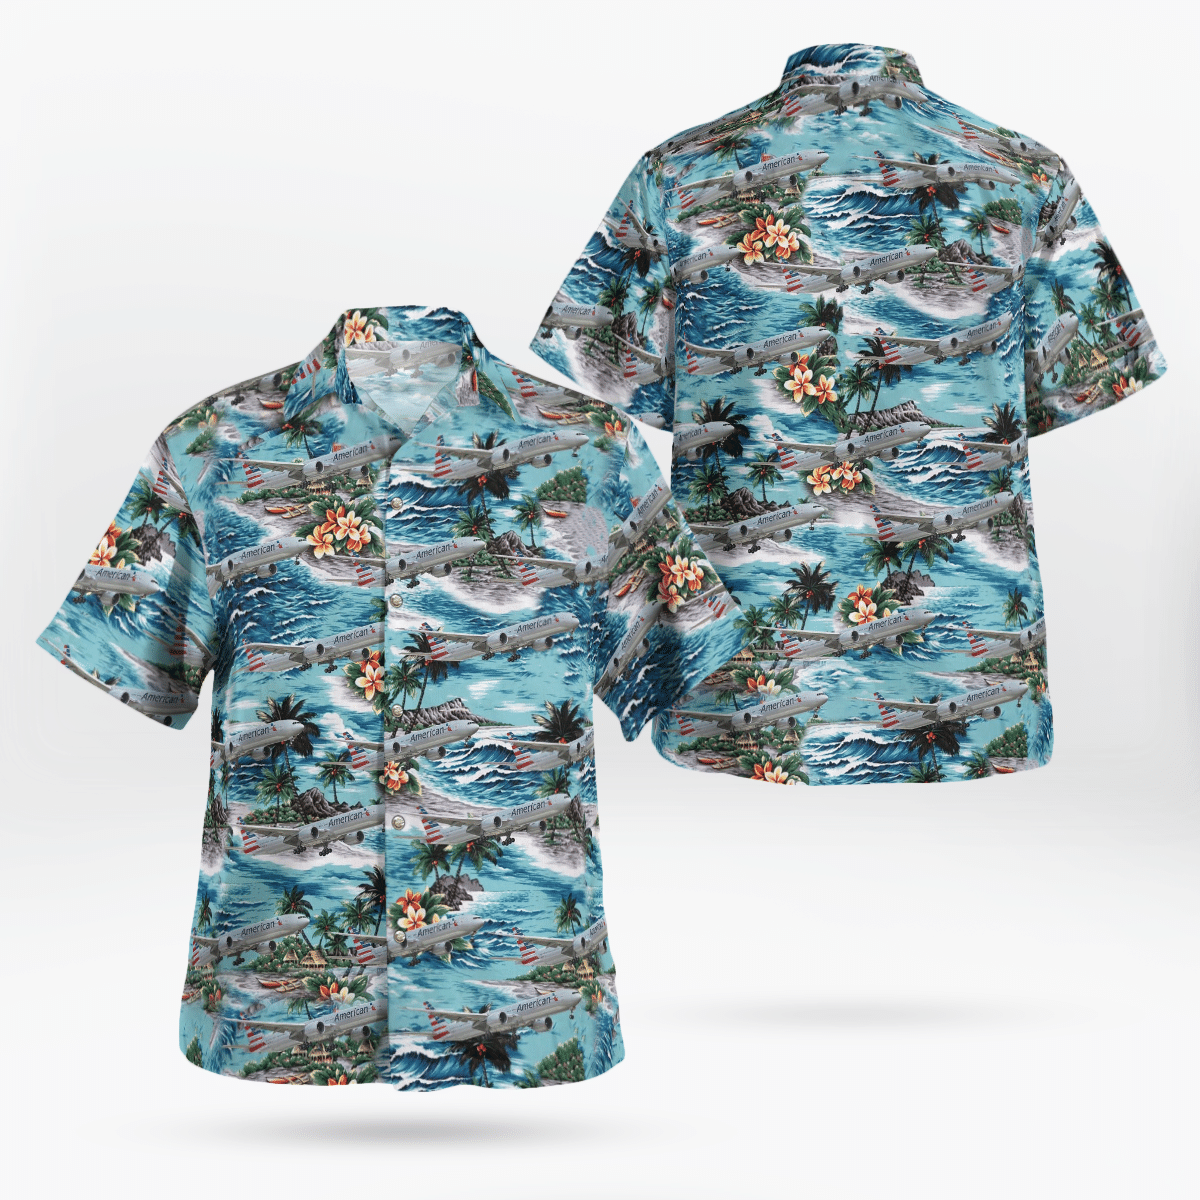 Summer so cool with top new hawaiian shirt below 71